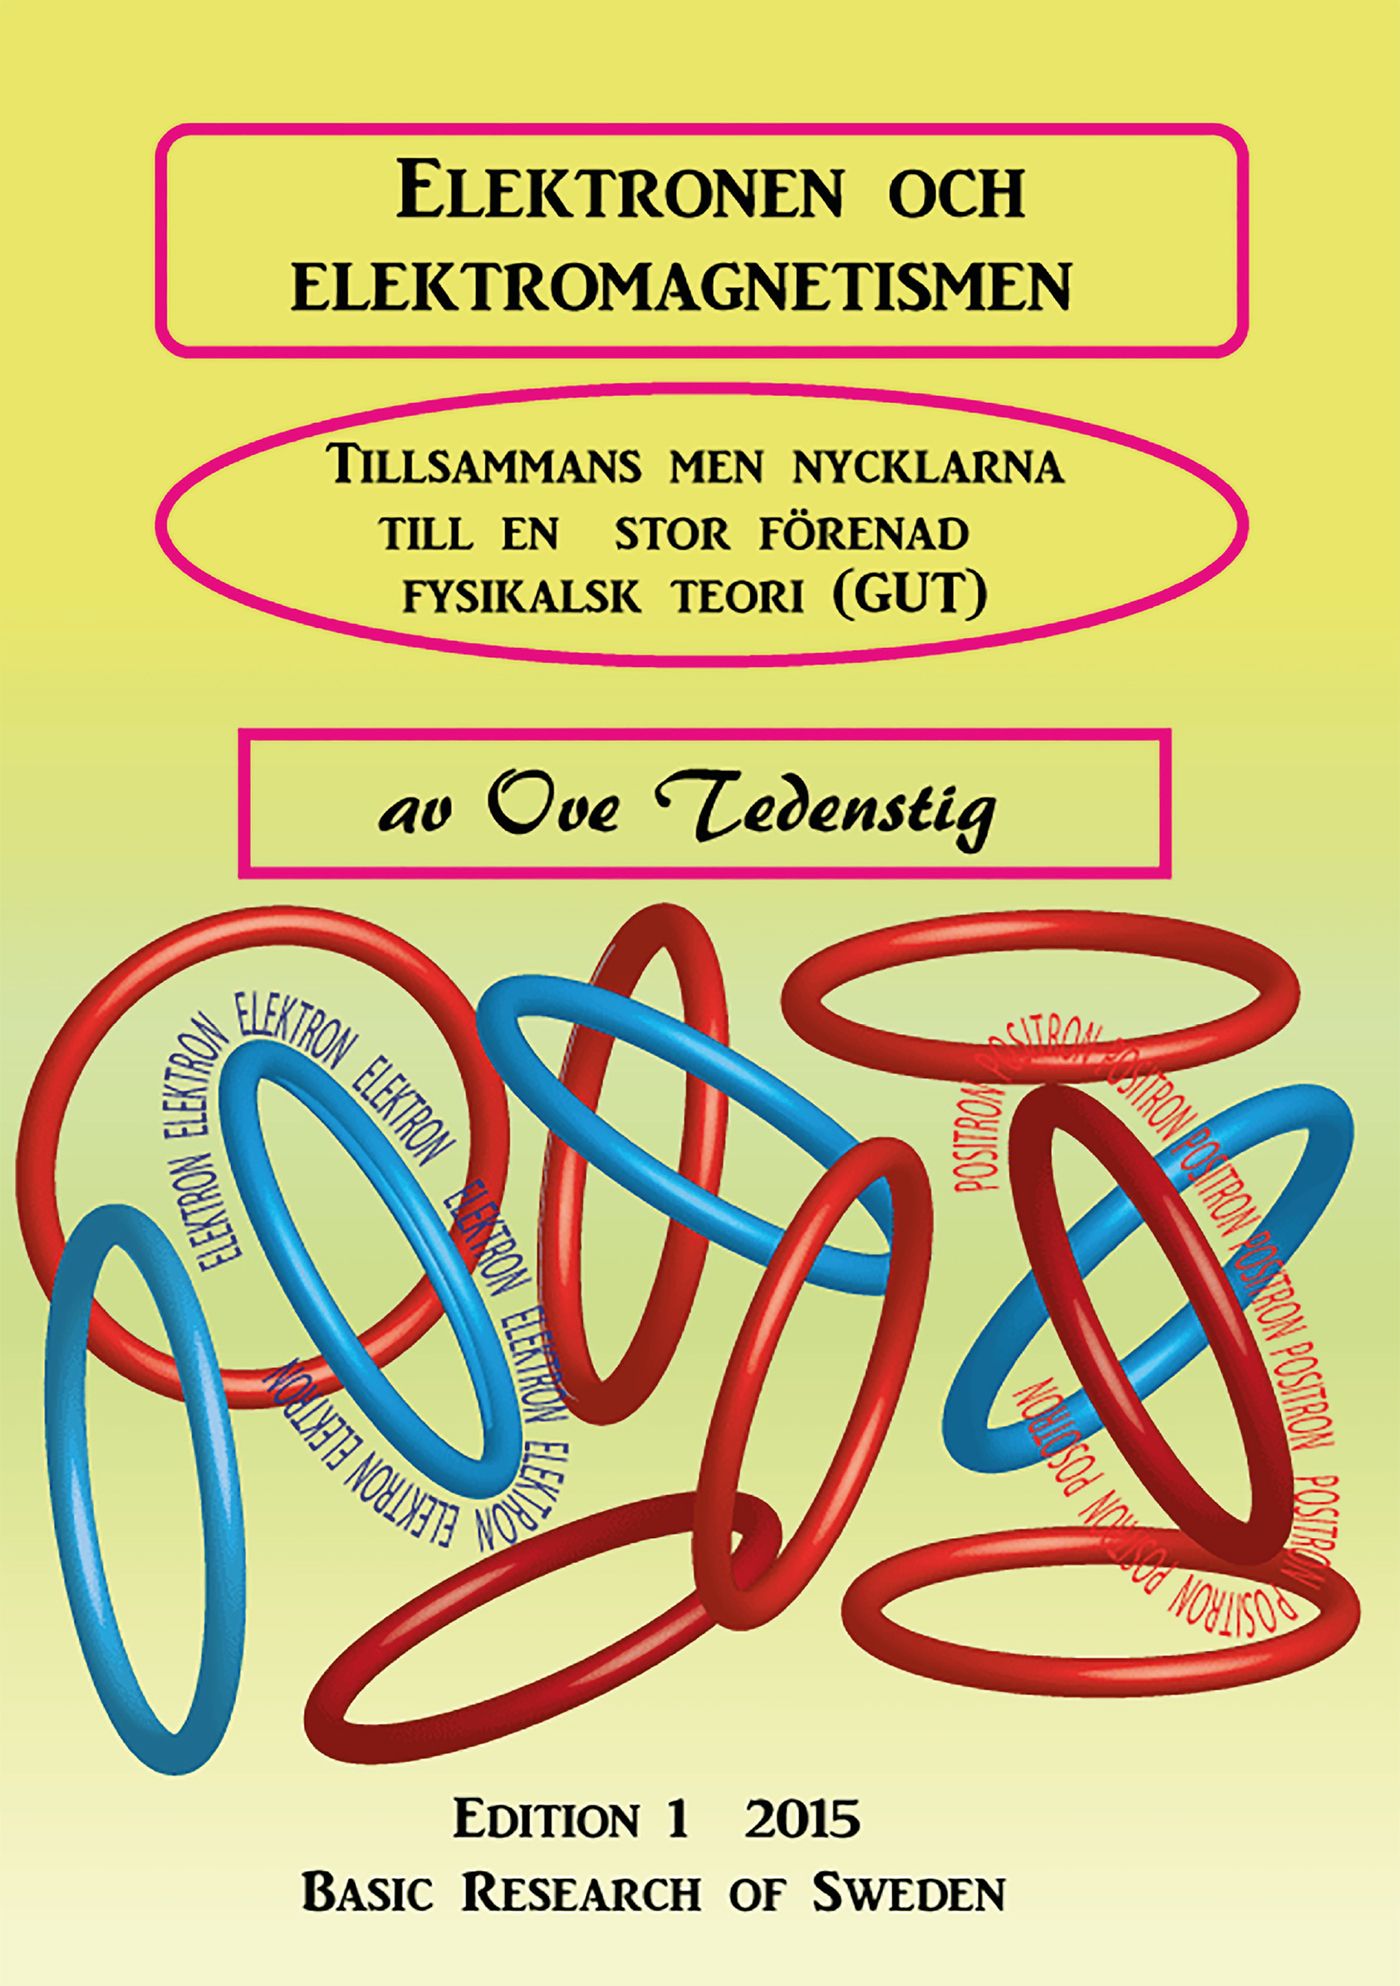 Elektronen och Elektromagnetismen, eBook by Ove Tedenstig